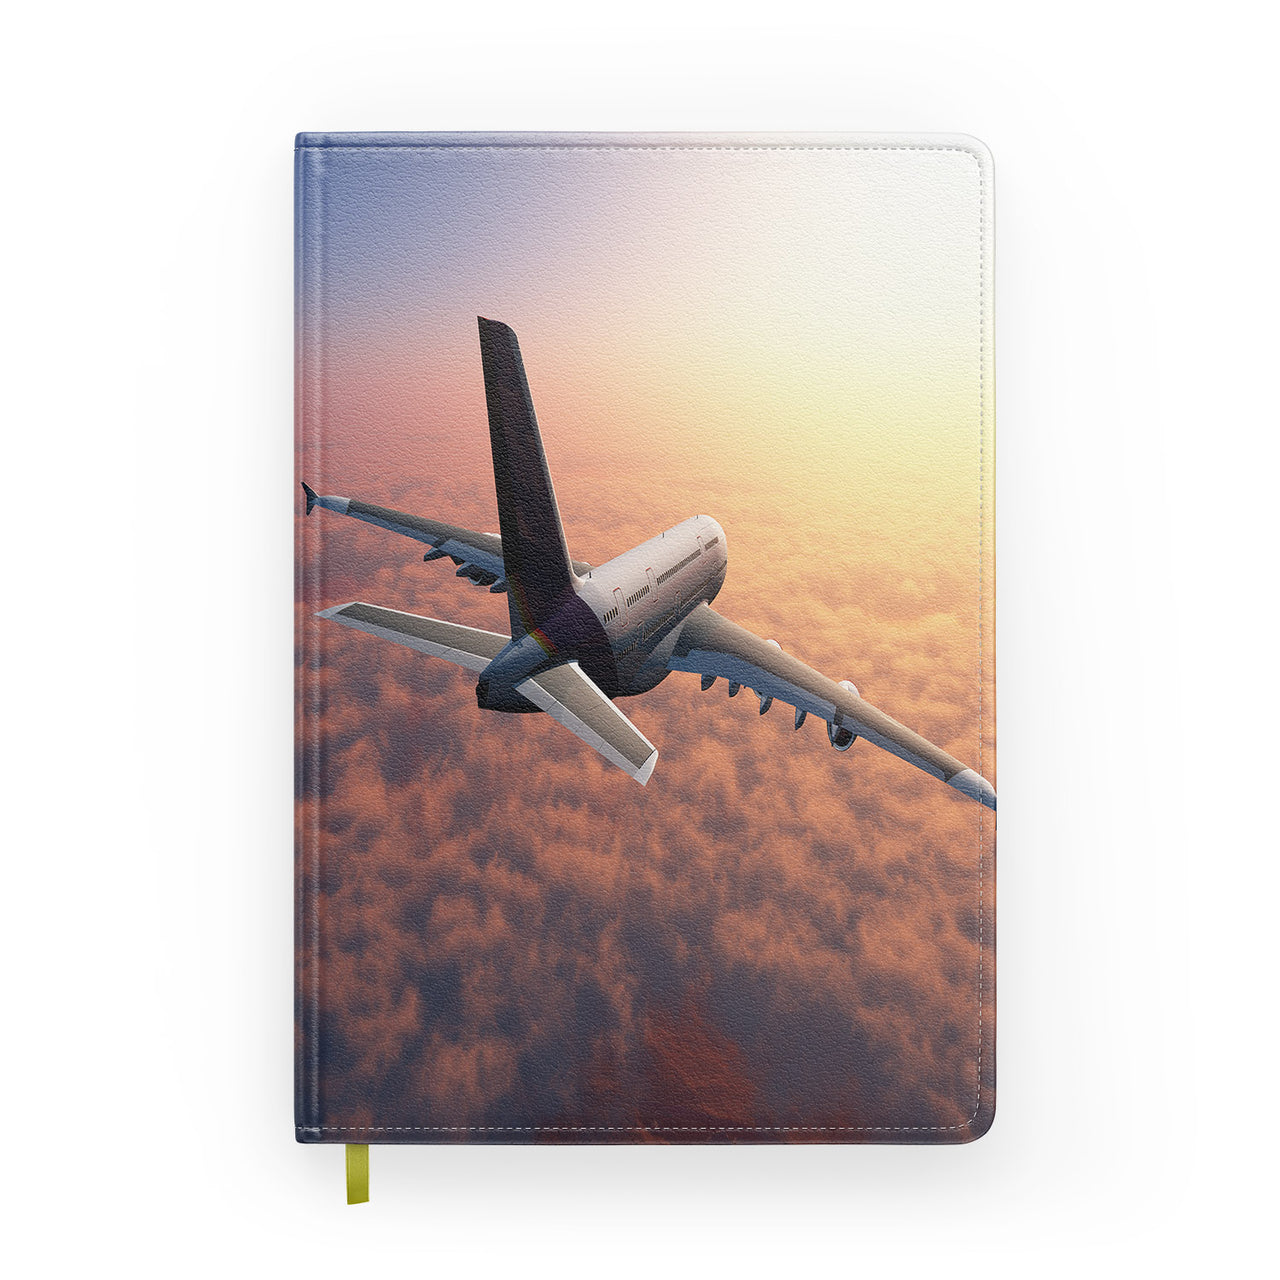 Super Cruising Airbus A380 over Clouds Designed Notebooks